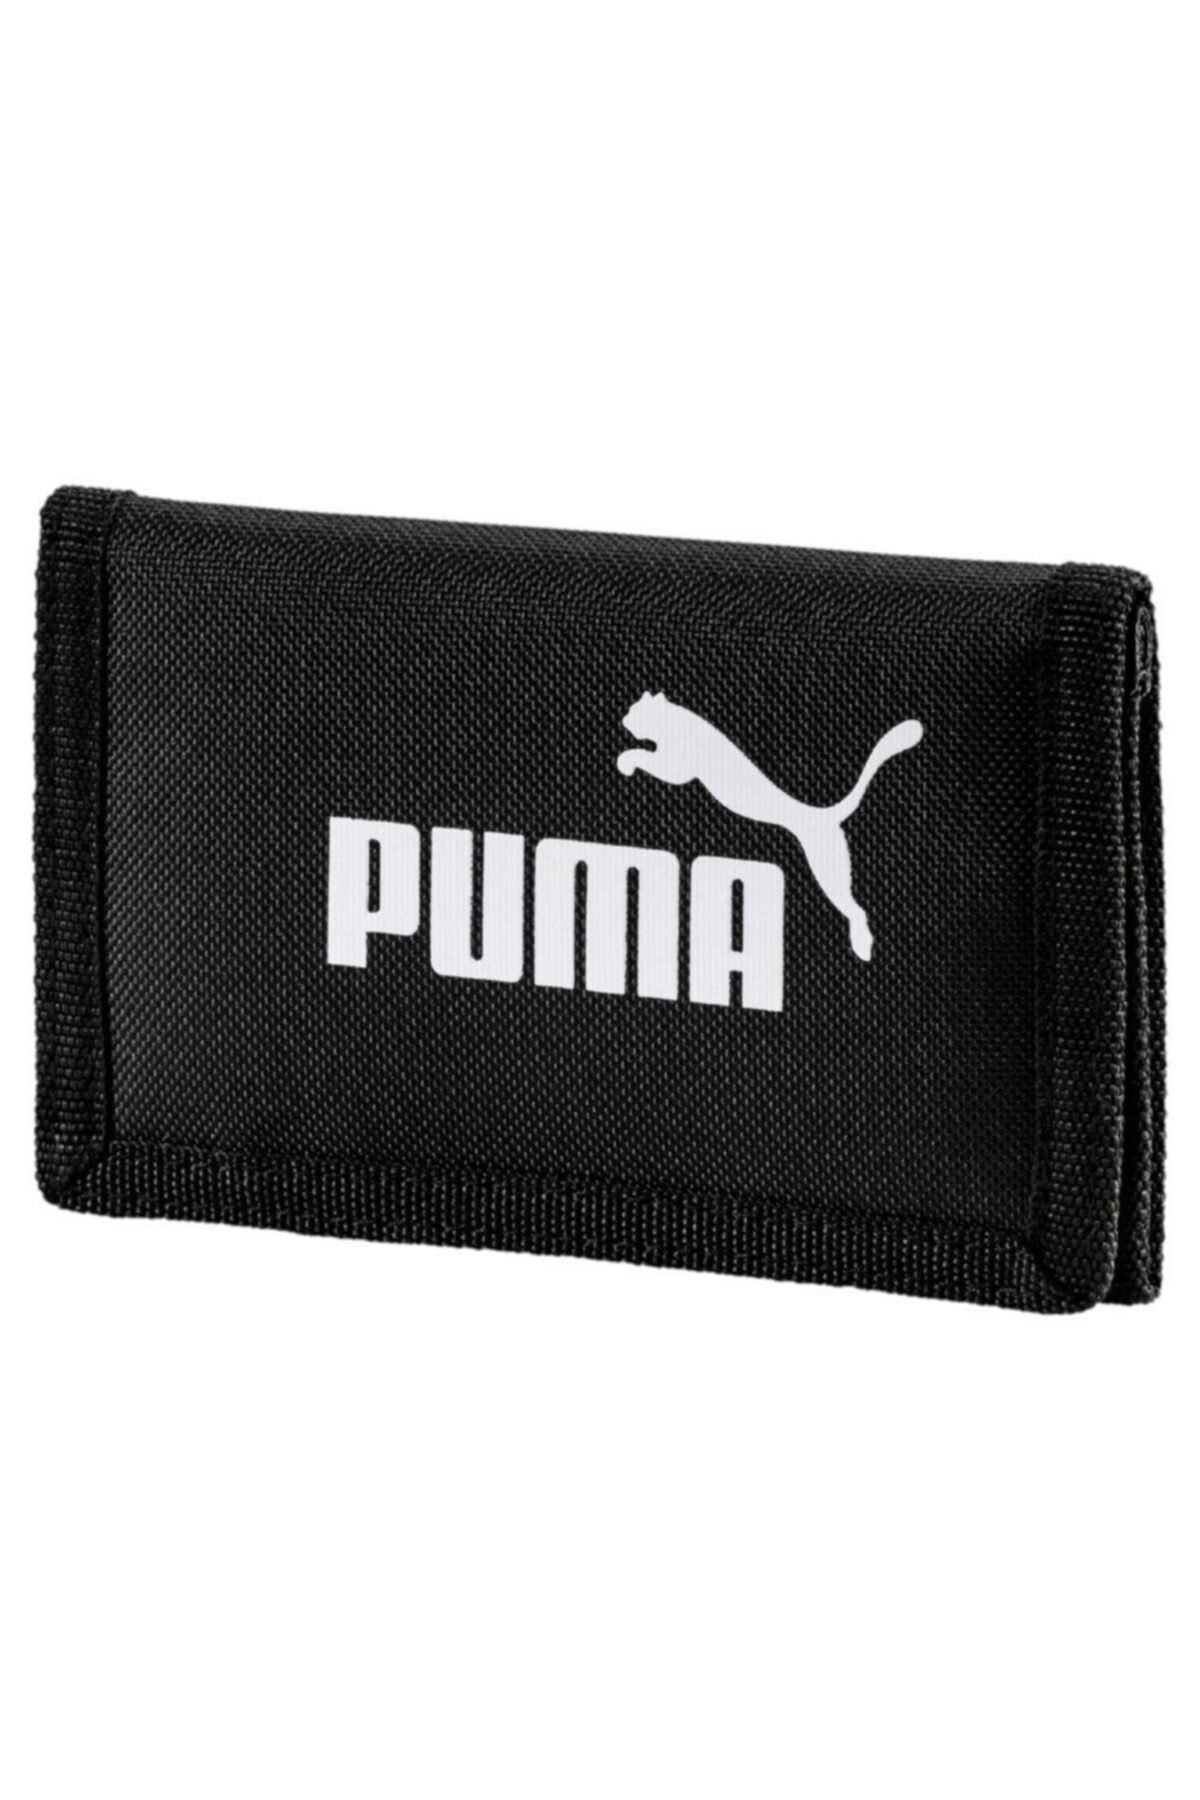 Puma 075617-01 Phase Wallet Ultra Spor Cüzdan